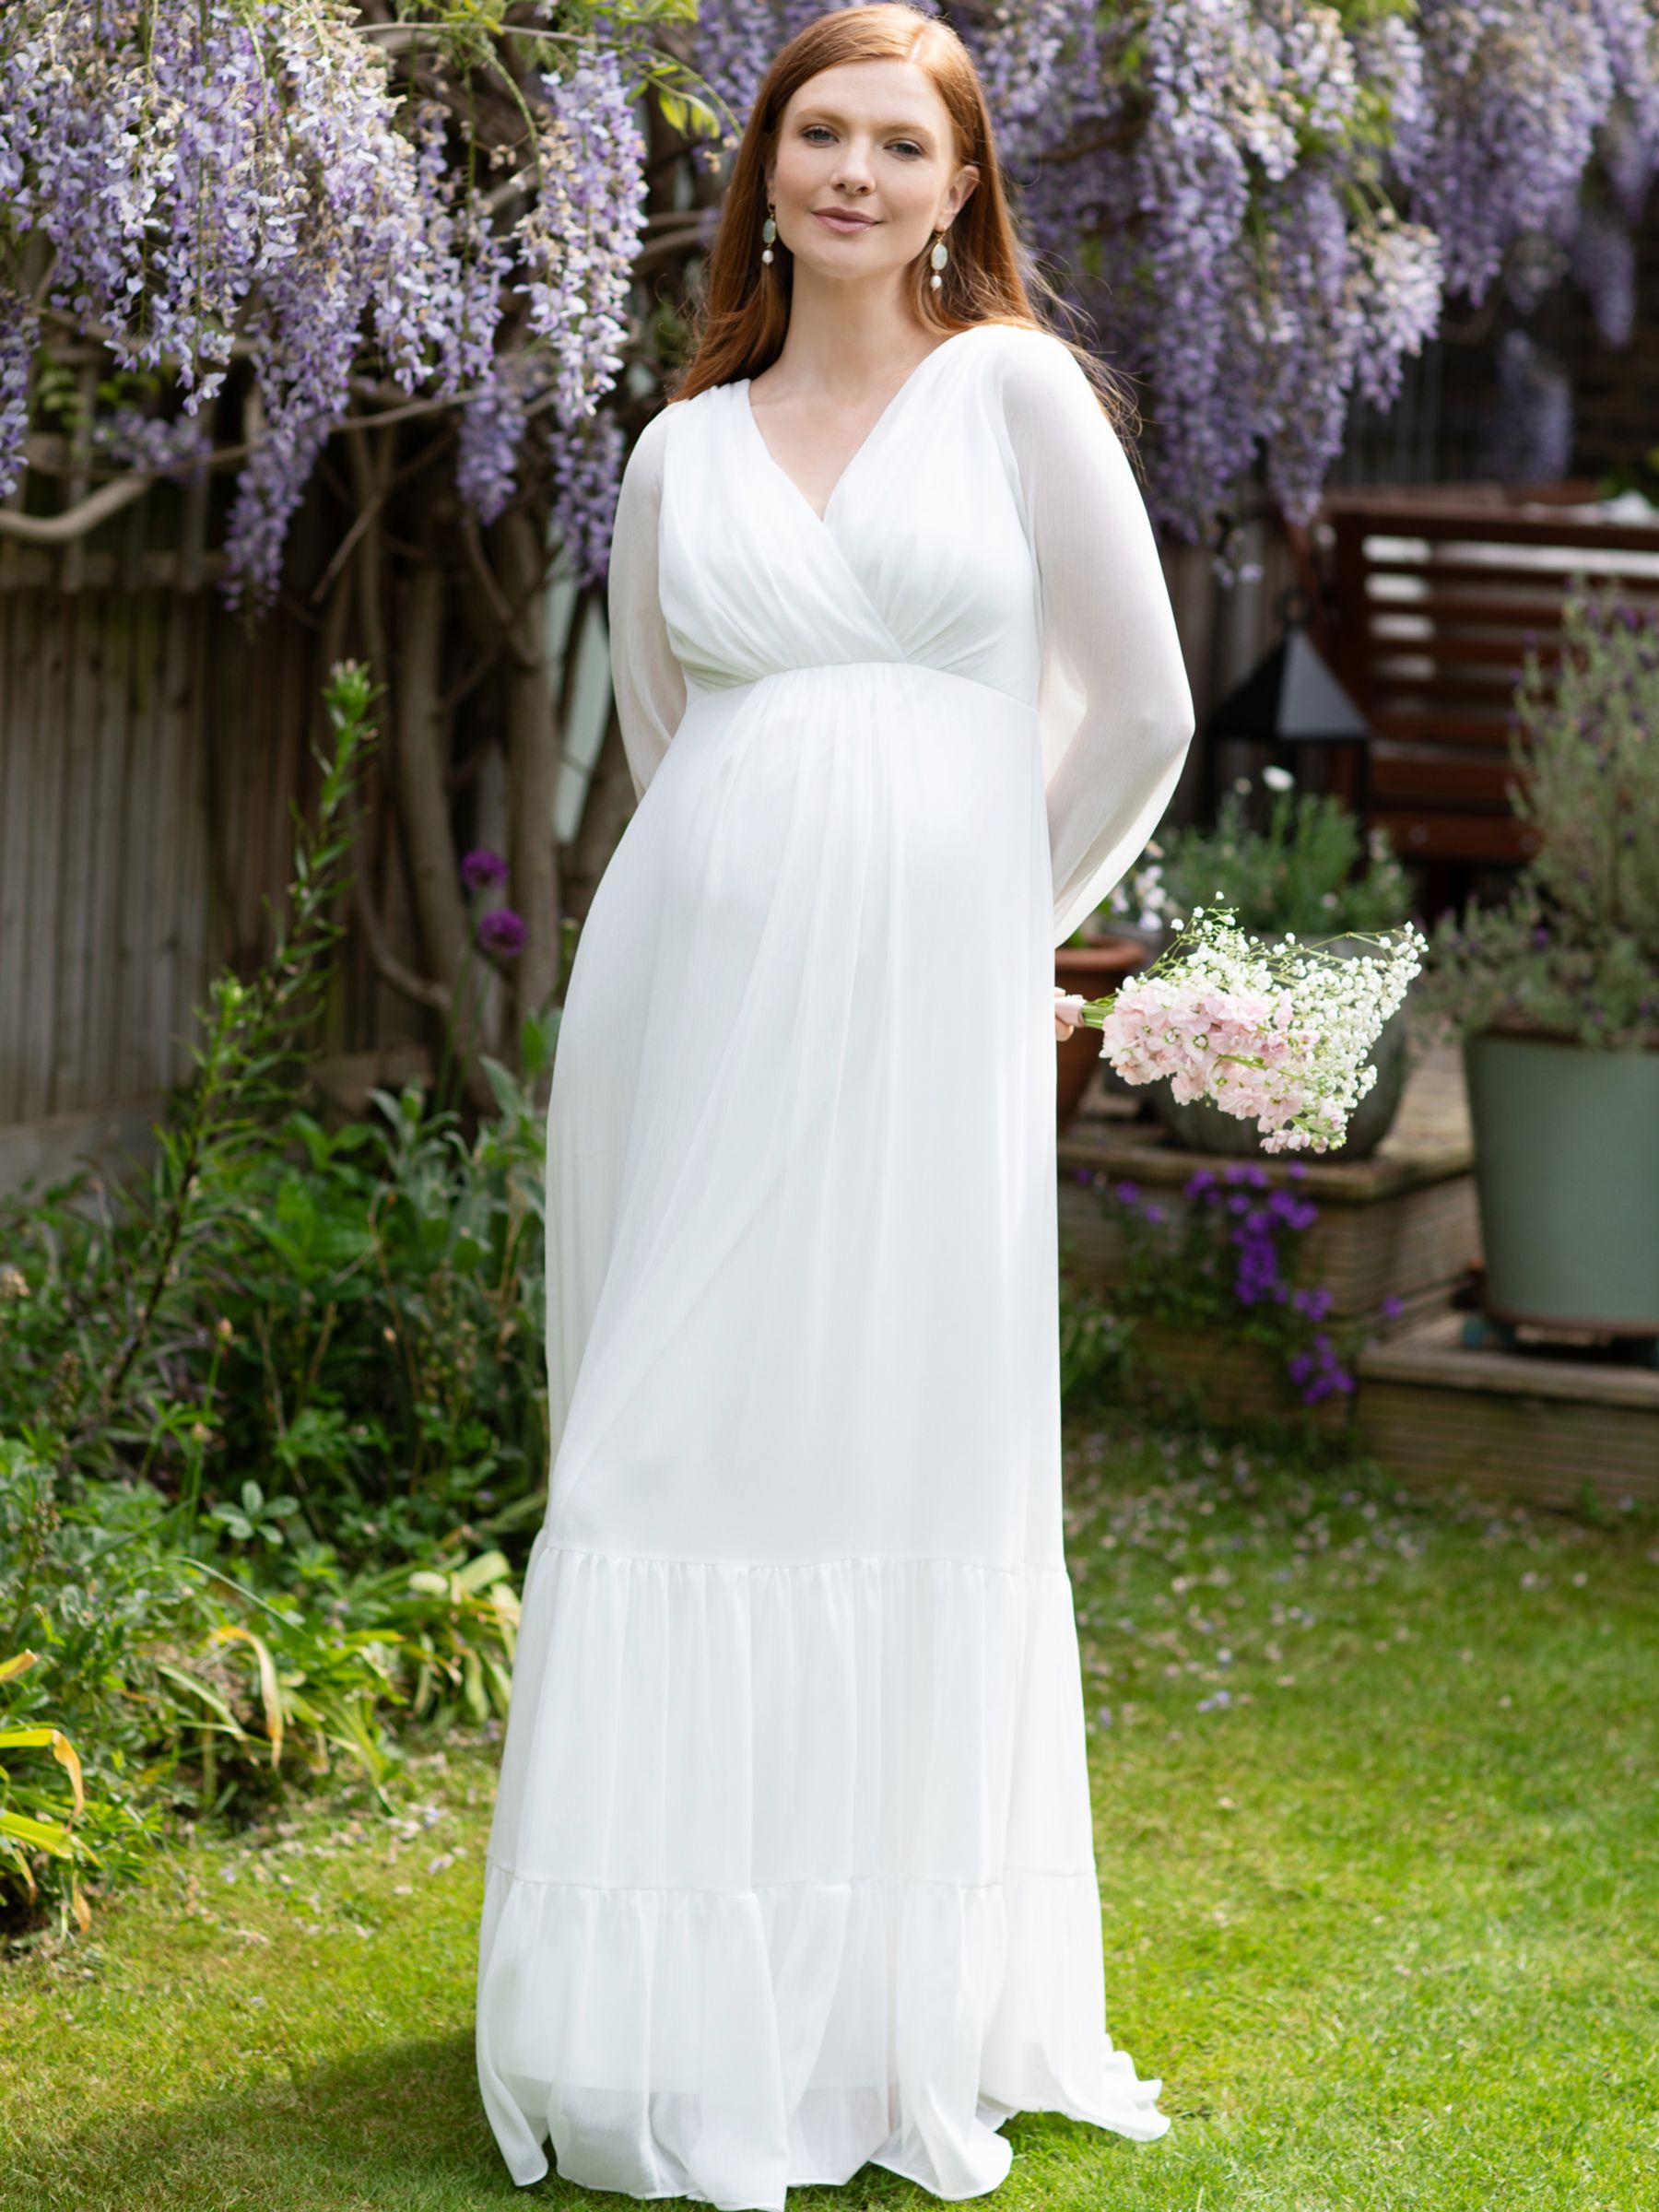 Tiffany Rose Maternity Bella Maxi Dress, White, 12-14